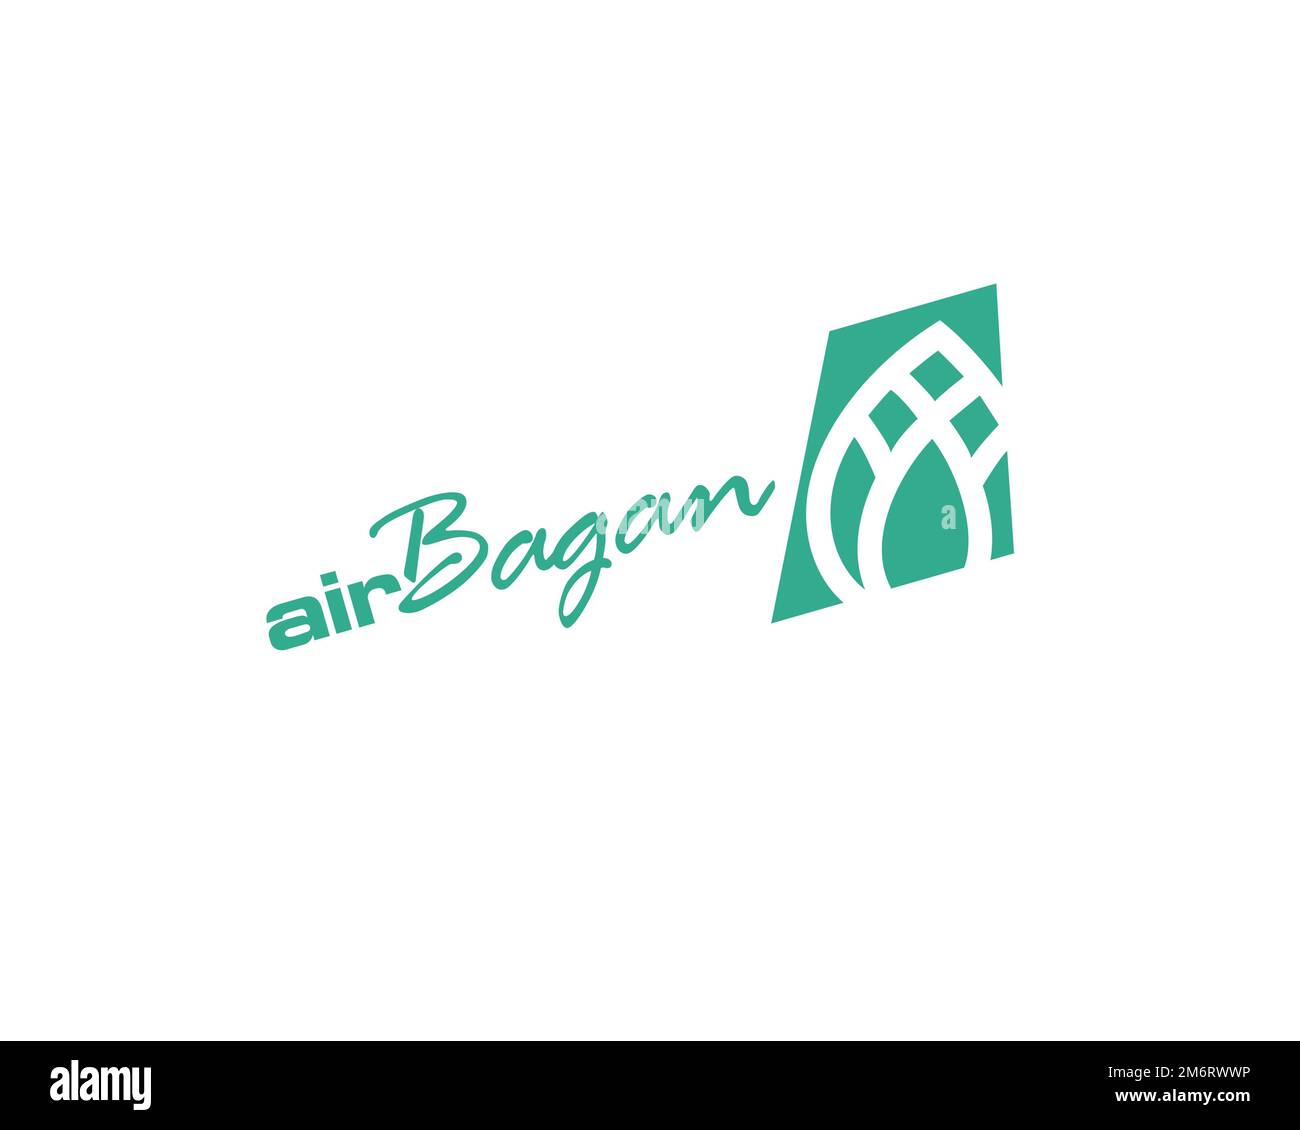 Air Bagan, Rotated Logo, White Background Stock Photo